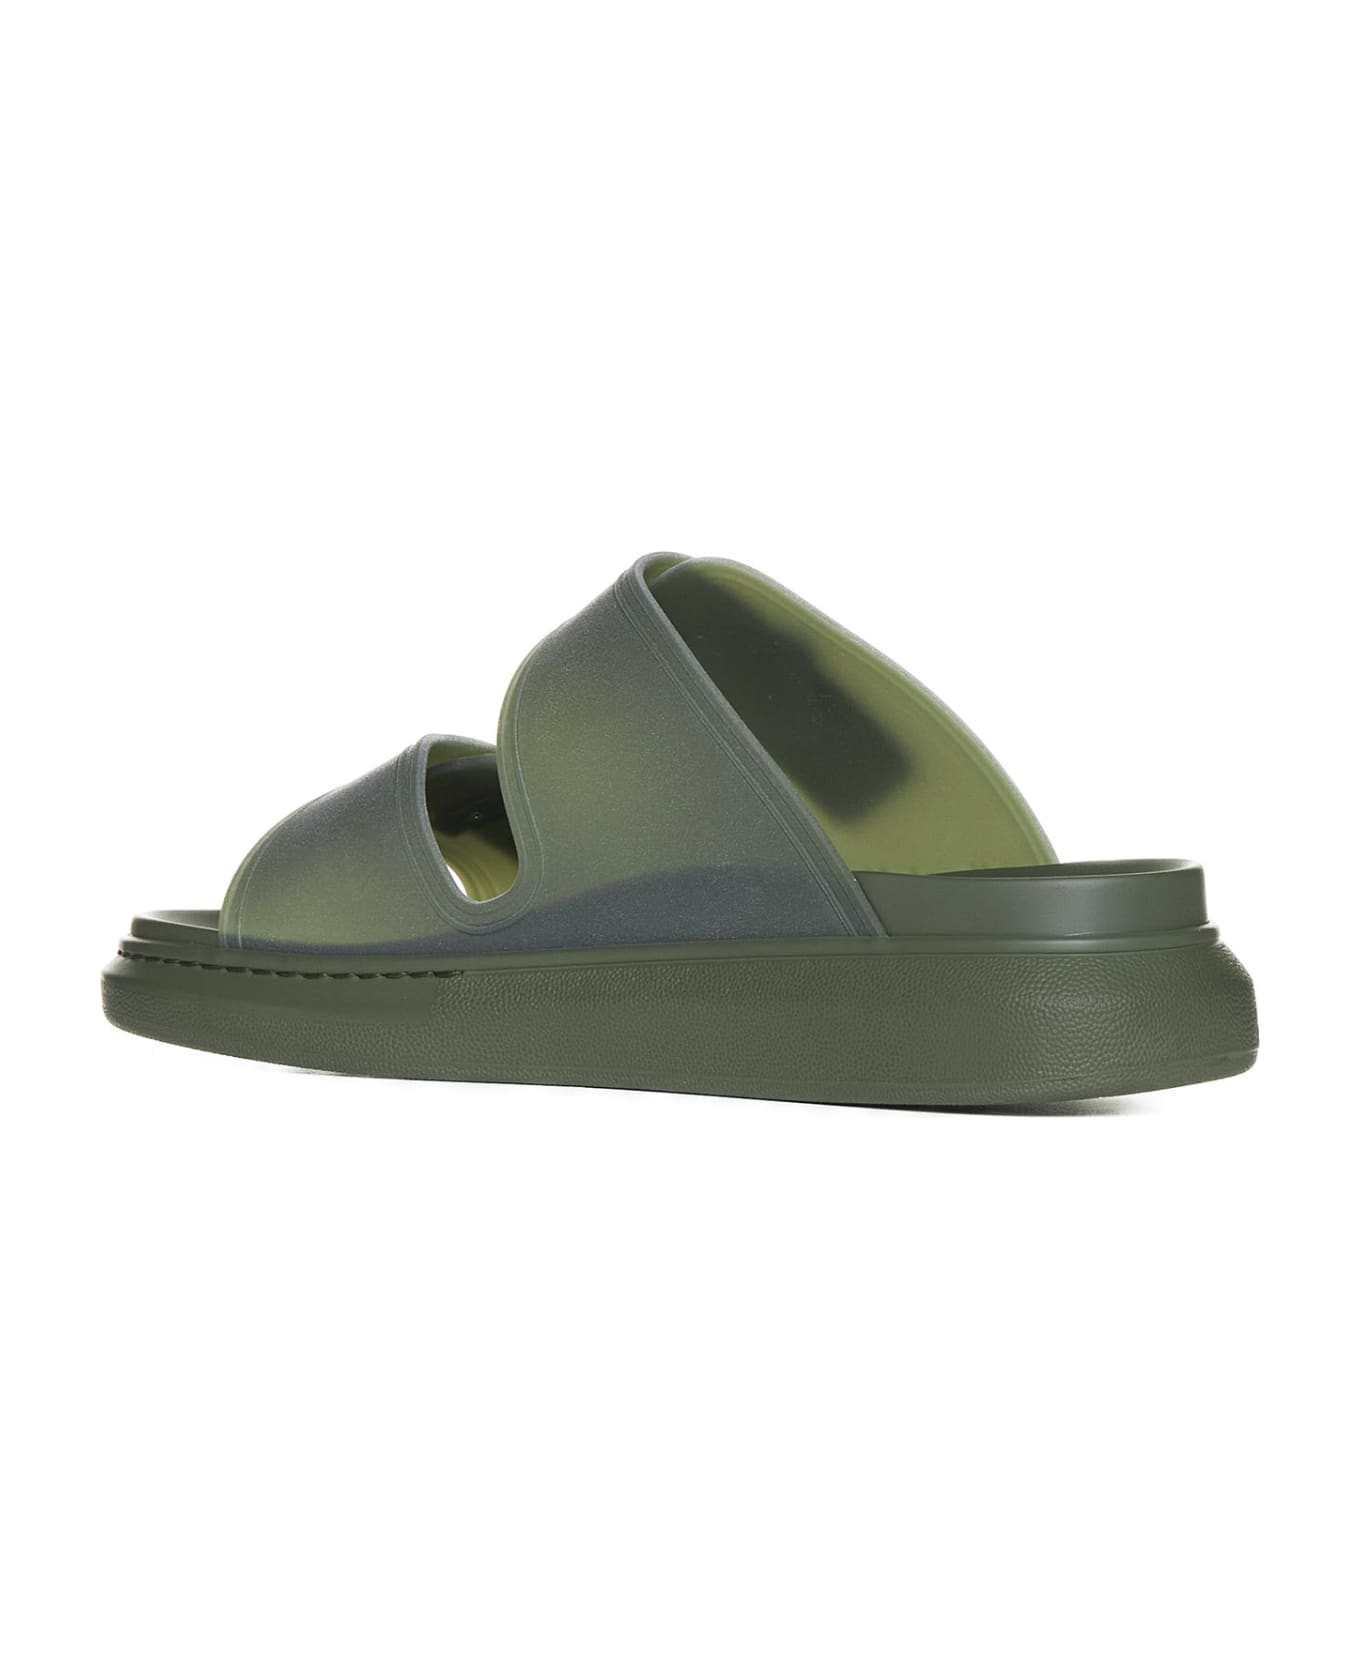 Alexander McQueen Rubber Sandals - Khaki/khaki